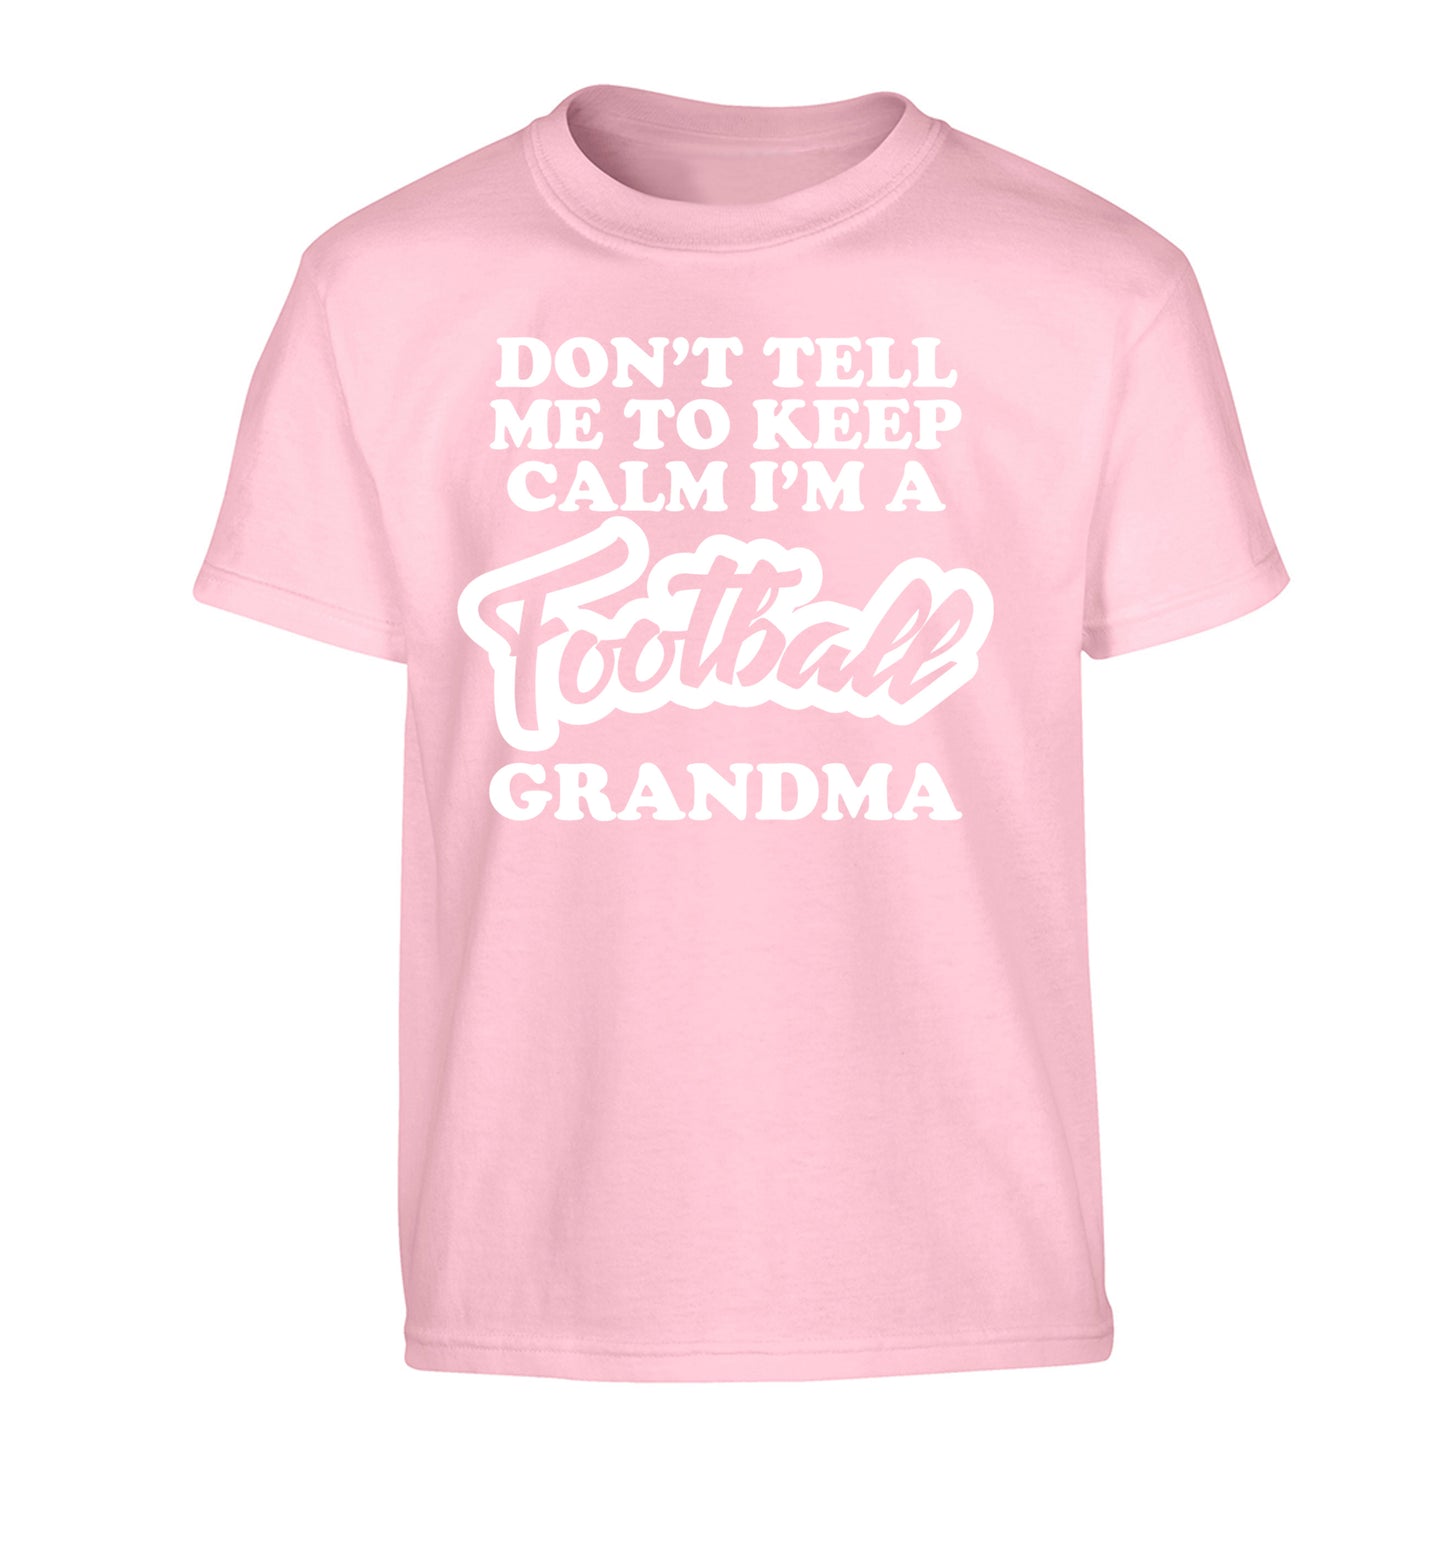 Don't tell me to keep calm I'm a football grandma Children's light pink Tshirt 12-14 Years